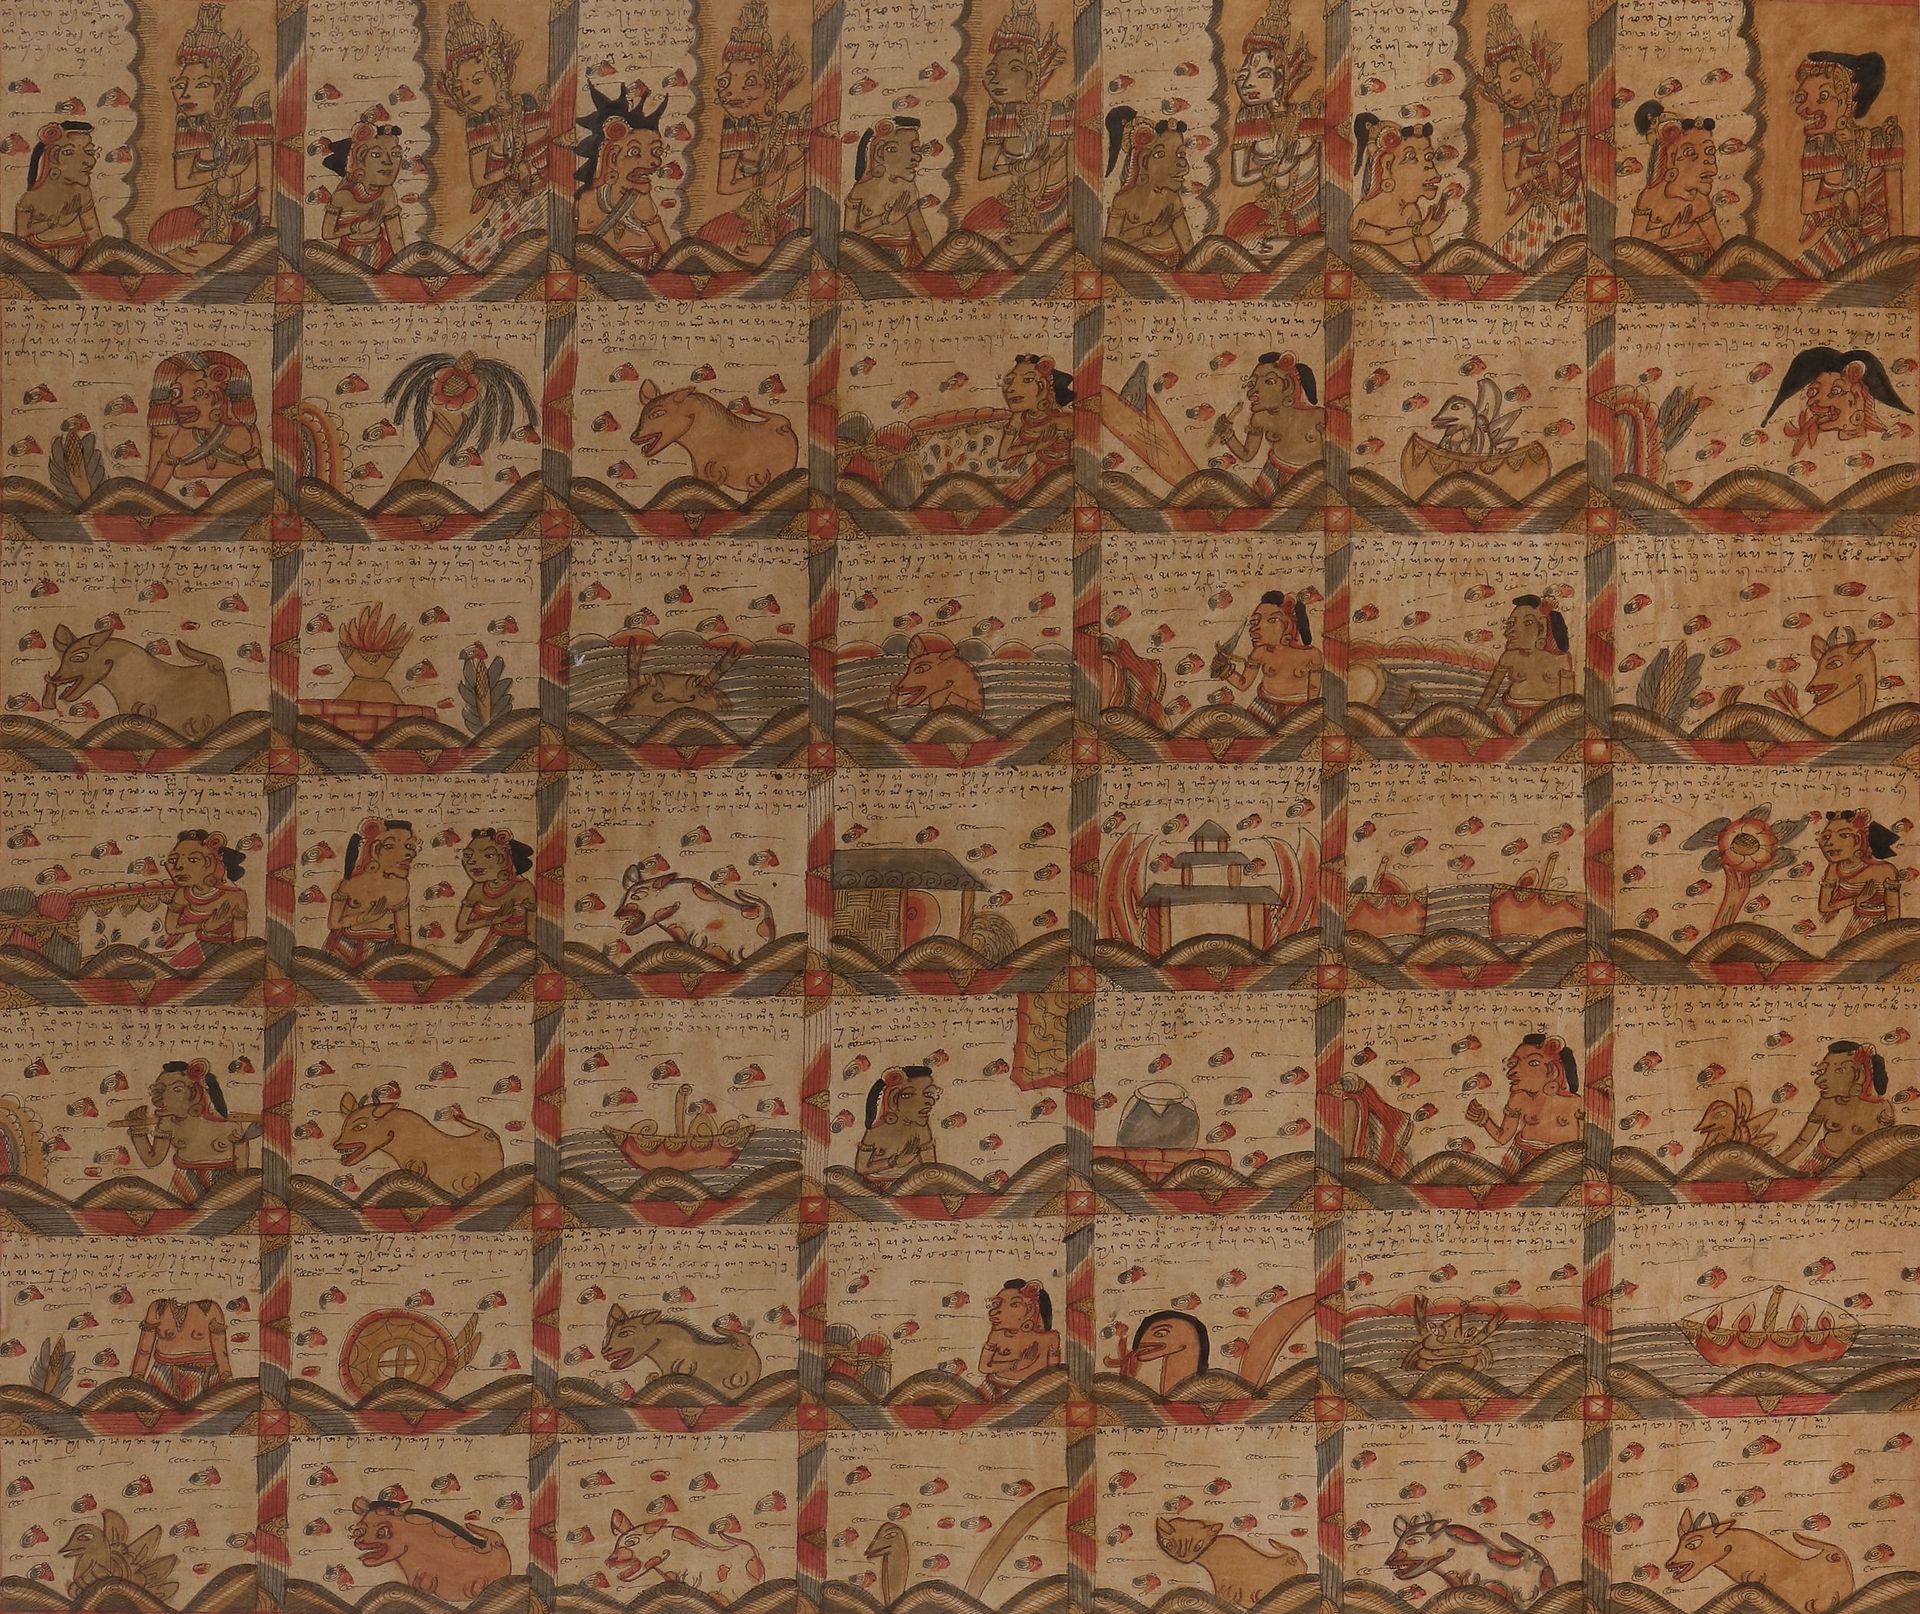 Null Palelintangan (calendario astrologico), Bali, XX secoloPittura
su tessuto d&hellip;